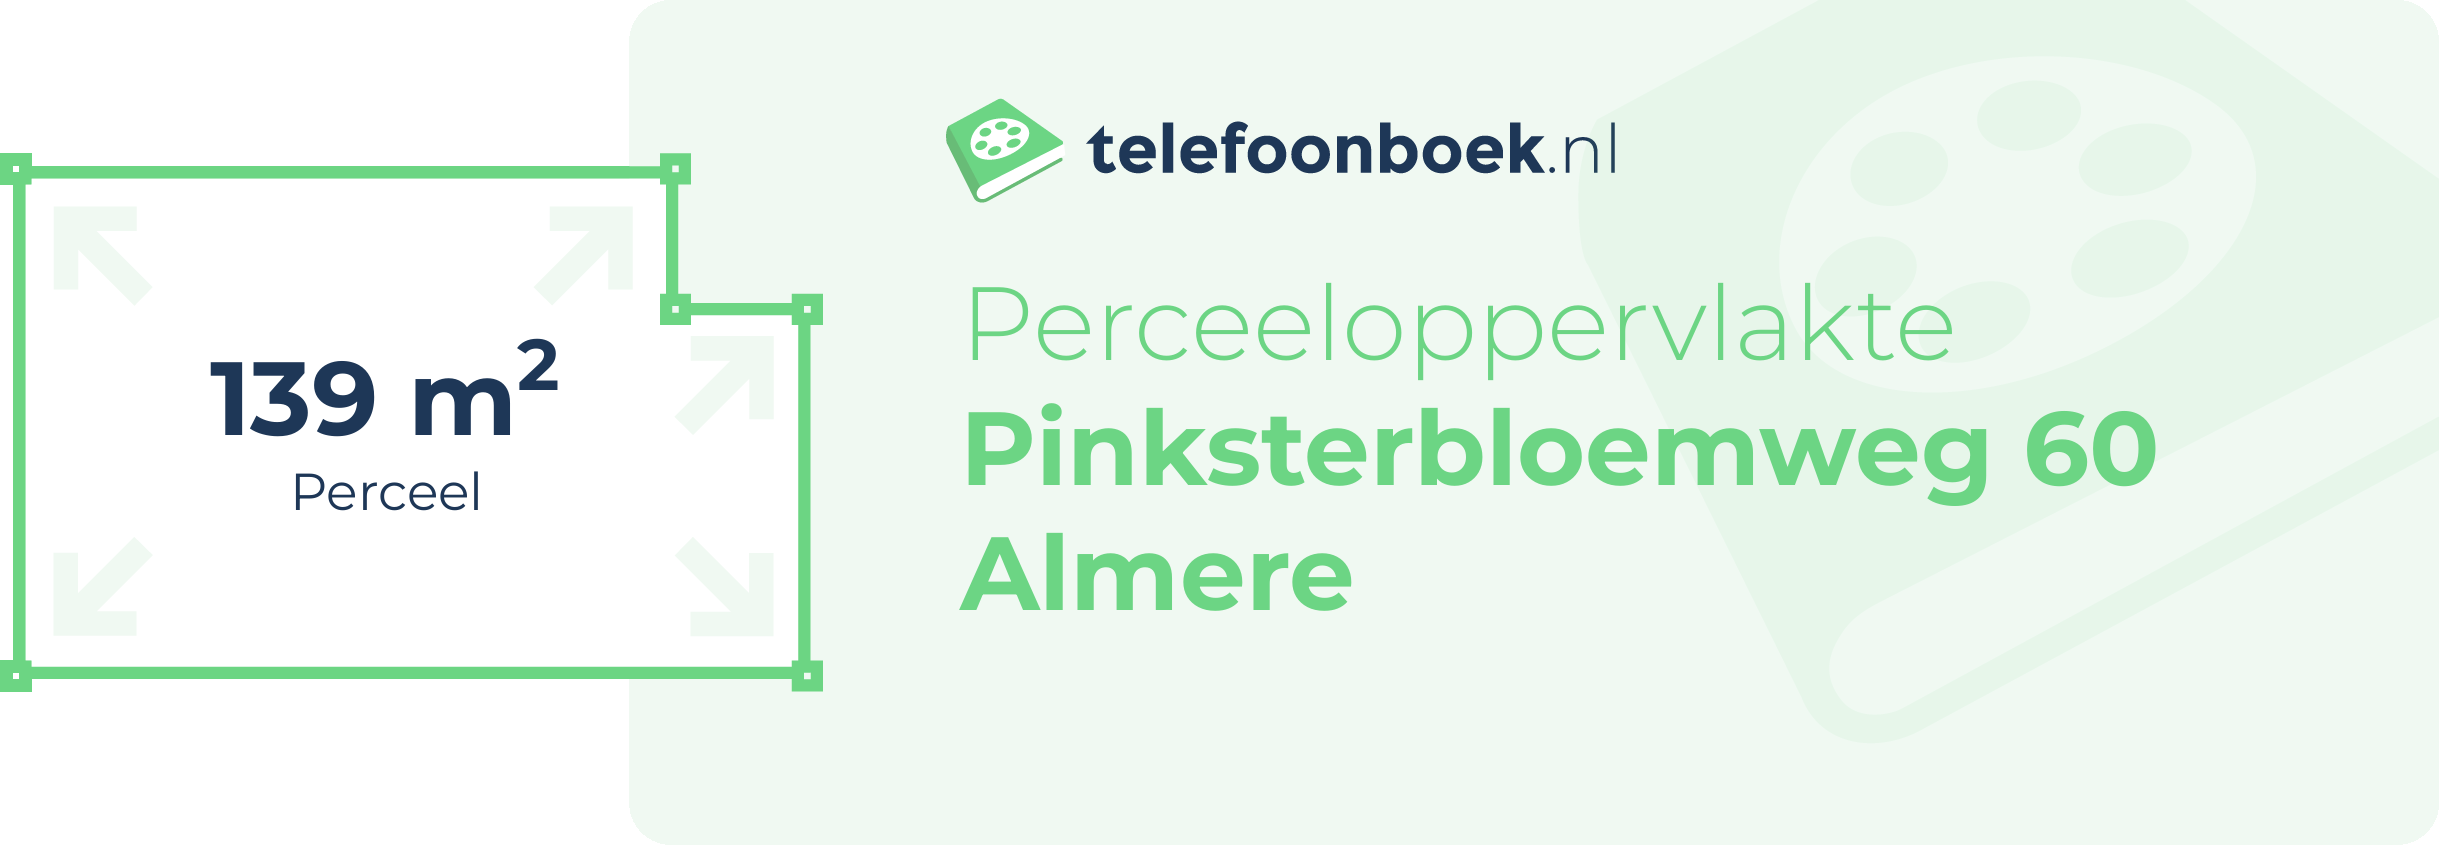 Perceeloppervlakte Pinksterbloemweg 60 Almere